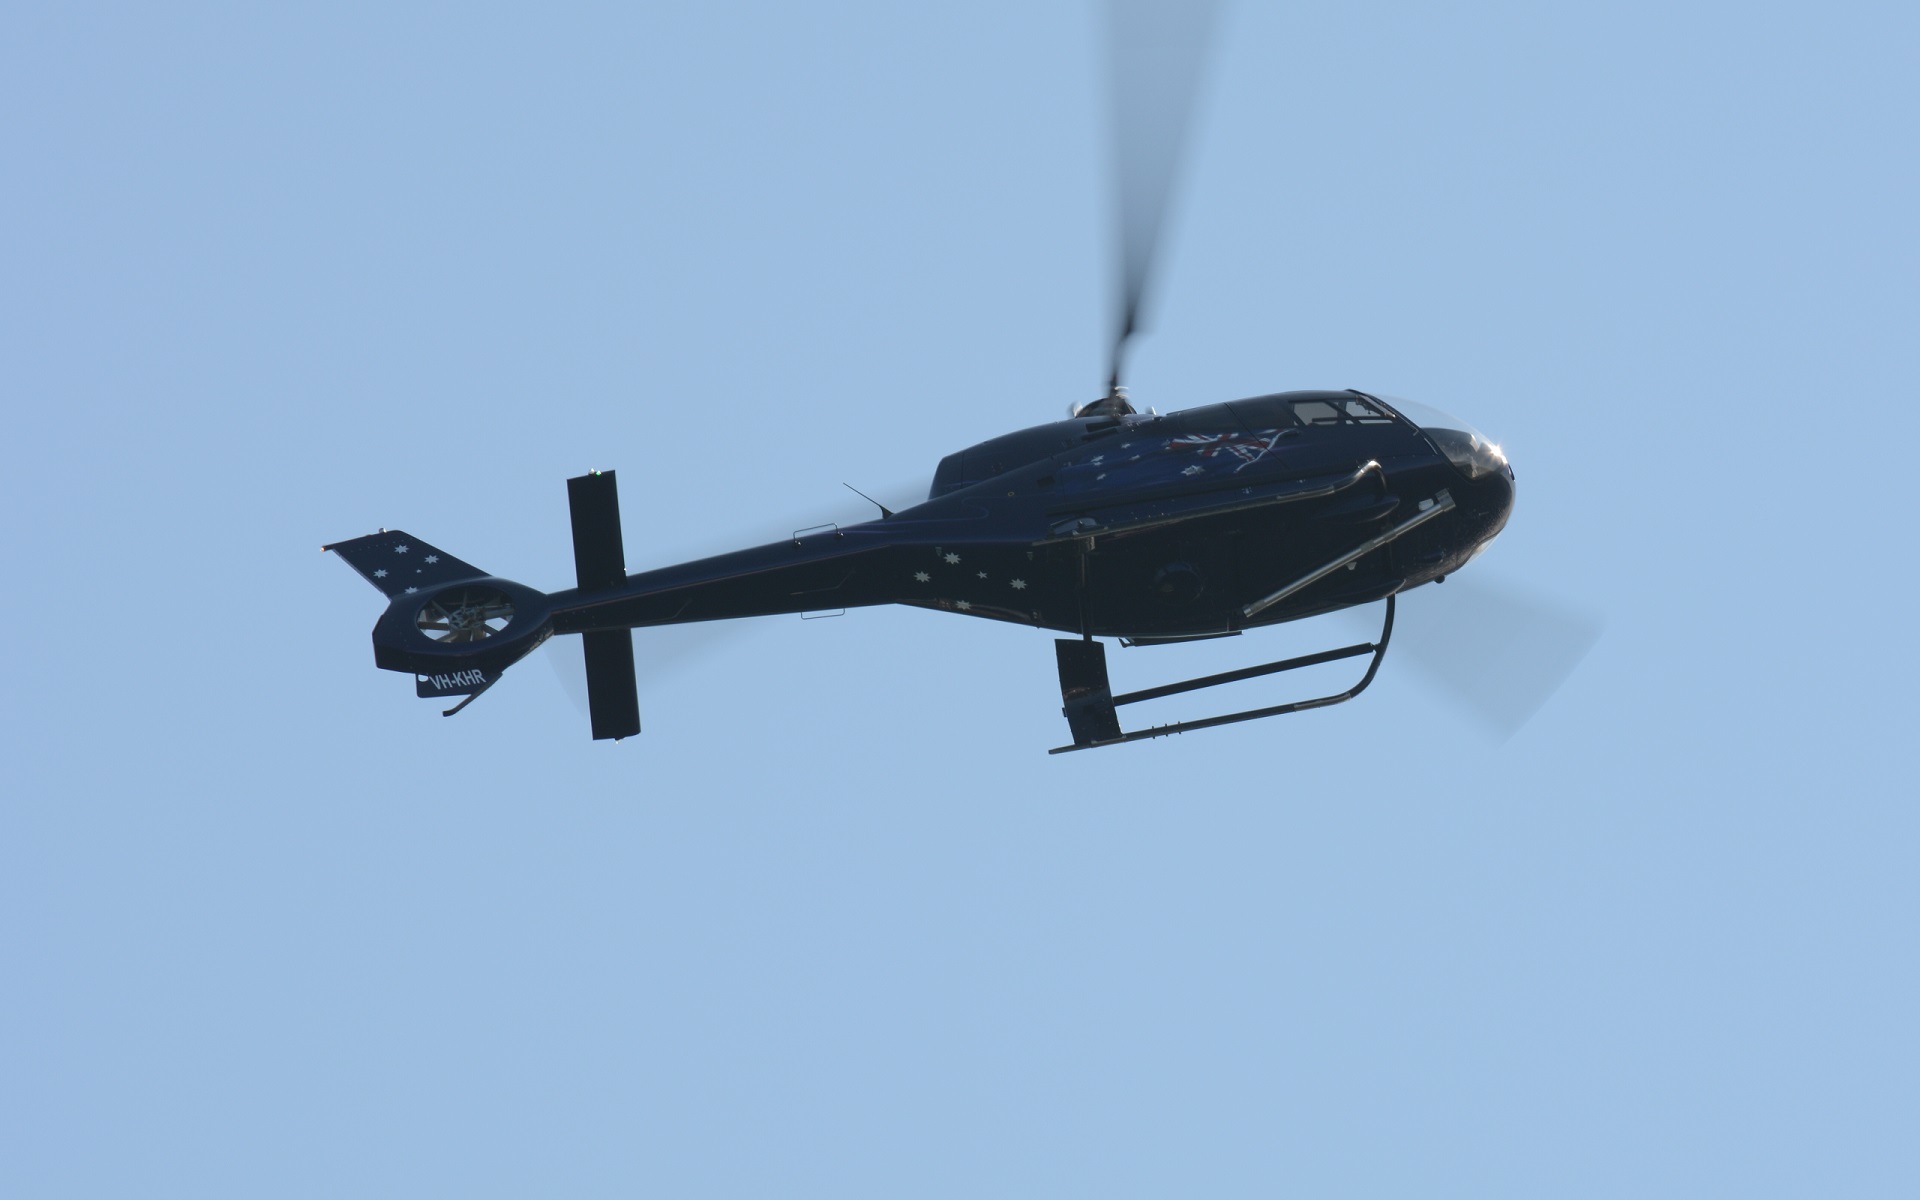 381290 descargar imagen vehículos, eurocóptero ec120, eurocopter, helicóptero, aeronave: fondos de pantalla y protectores de pantalla gratis